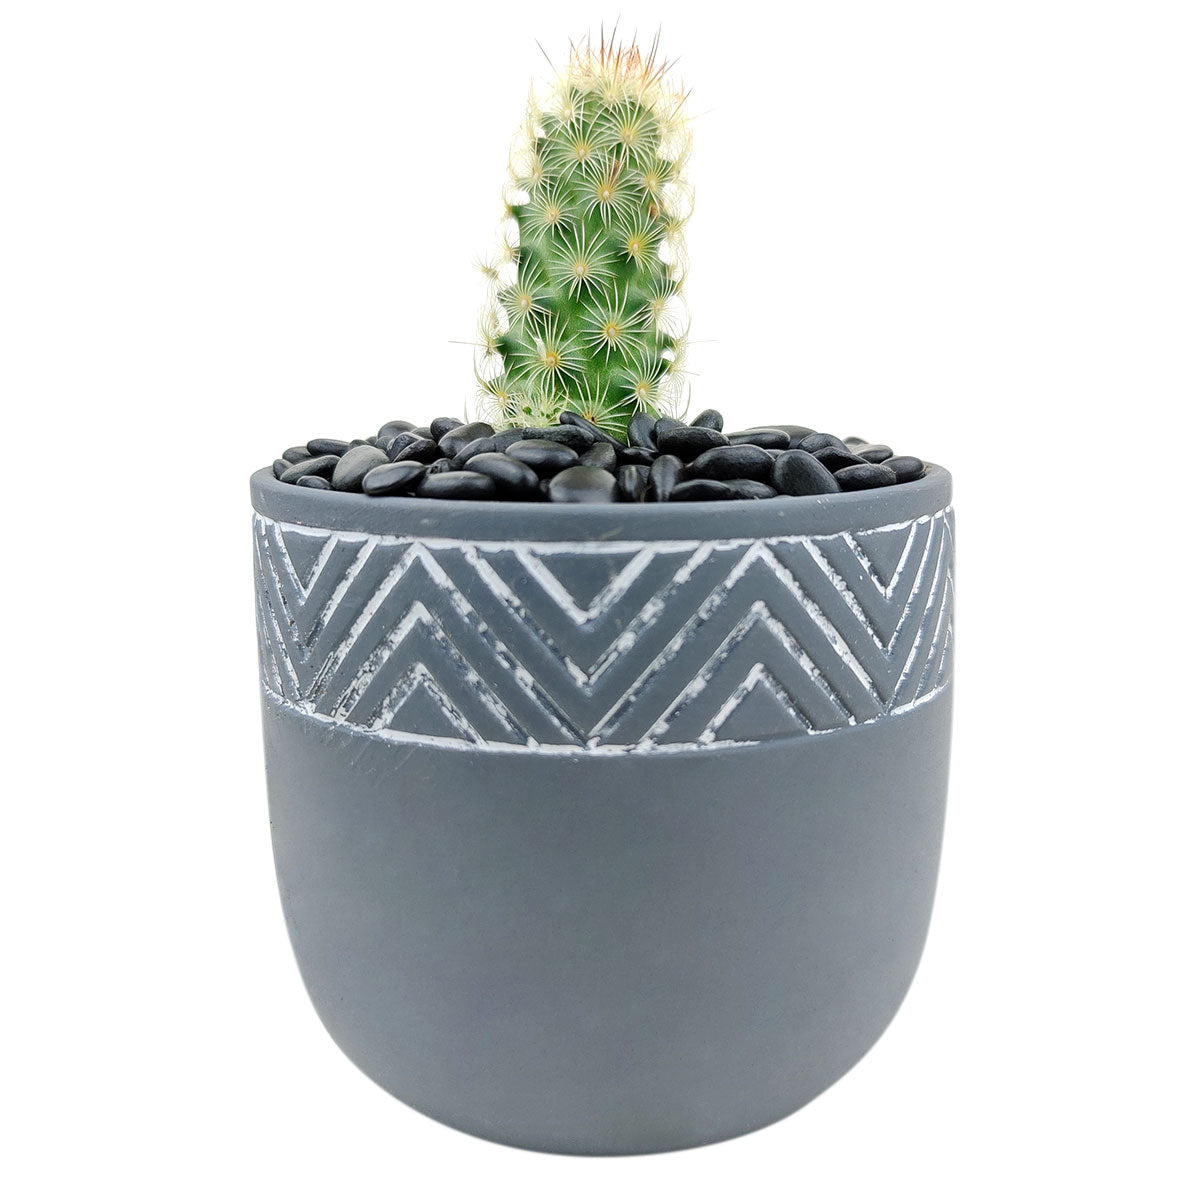 Gray Chevron Pot for sale, ceramic vase for home decor, ceramic succulent and cactus pots for sale, Succulent gift ideas